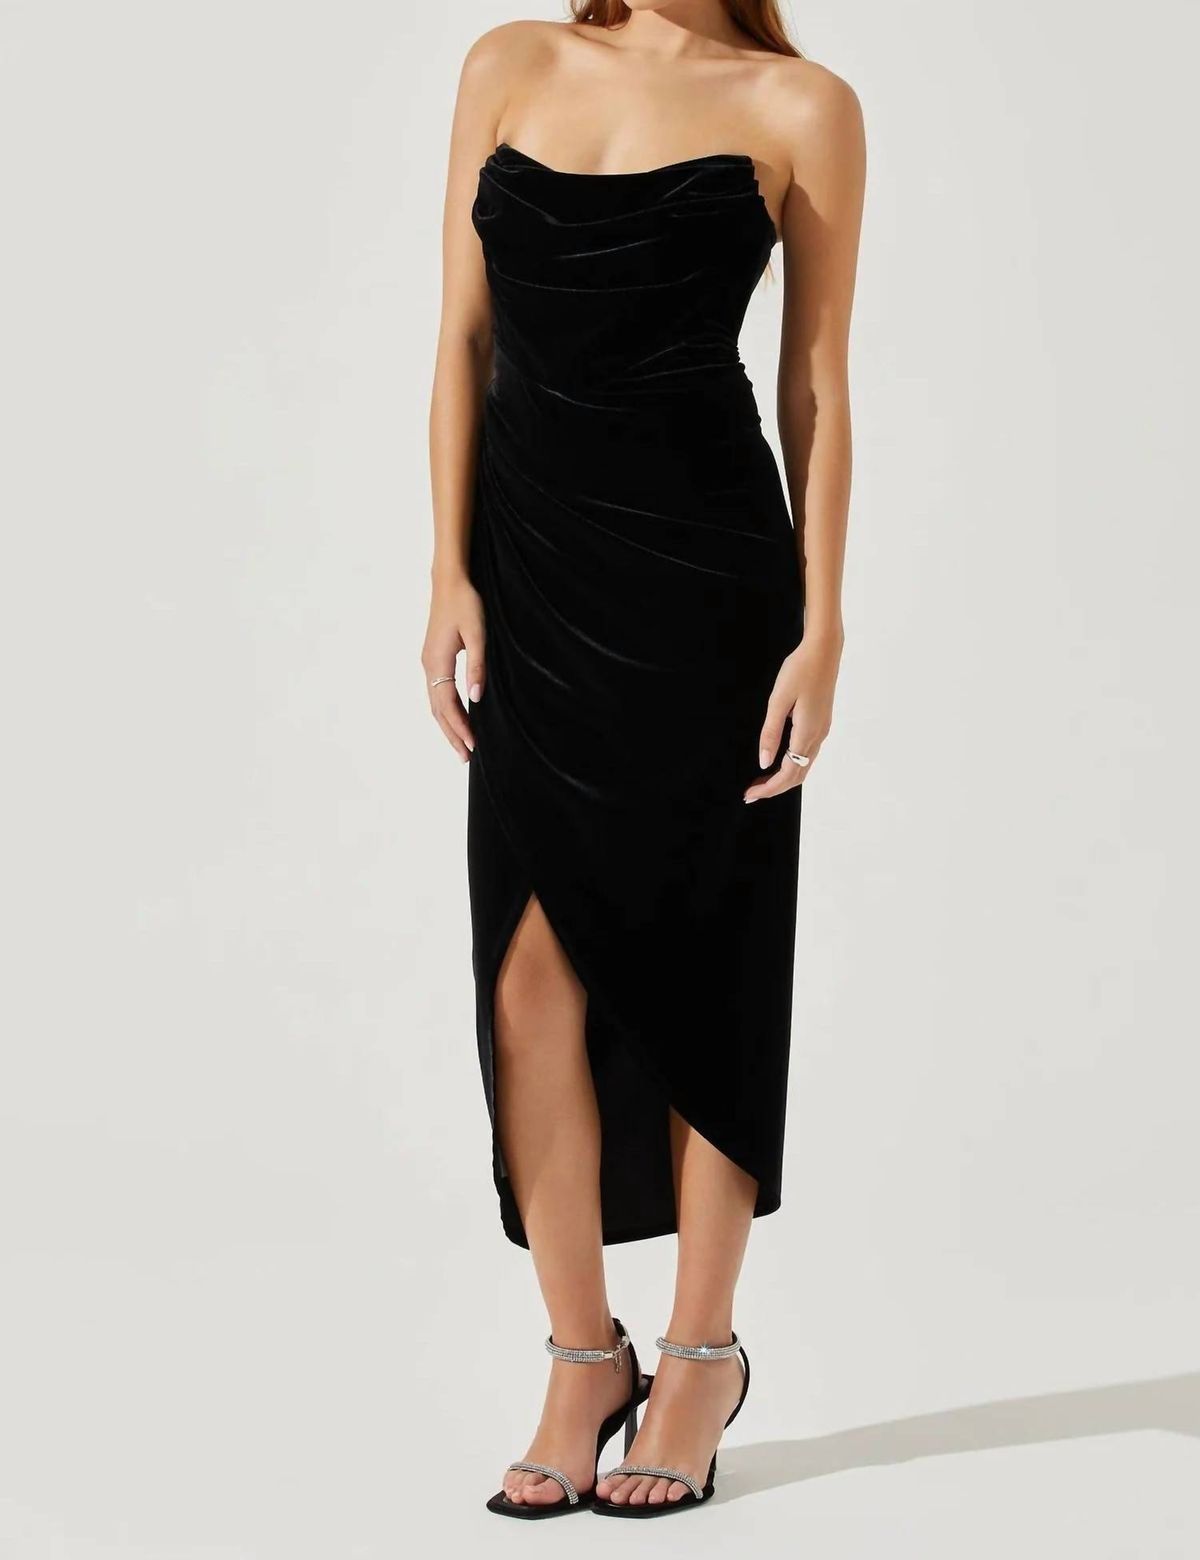 Style 1-2211303577-3471 ASTR Size S Strapless Velvet Black Cocktail Dress on Queenly